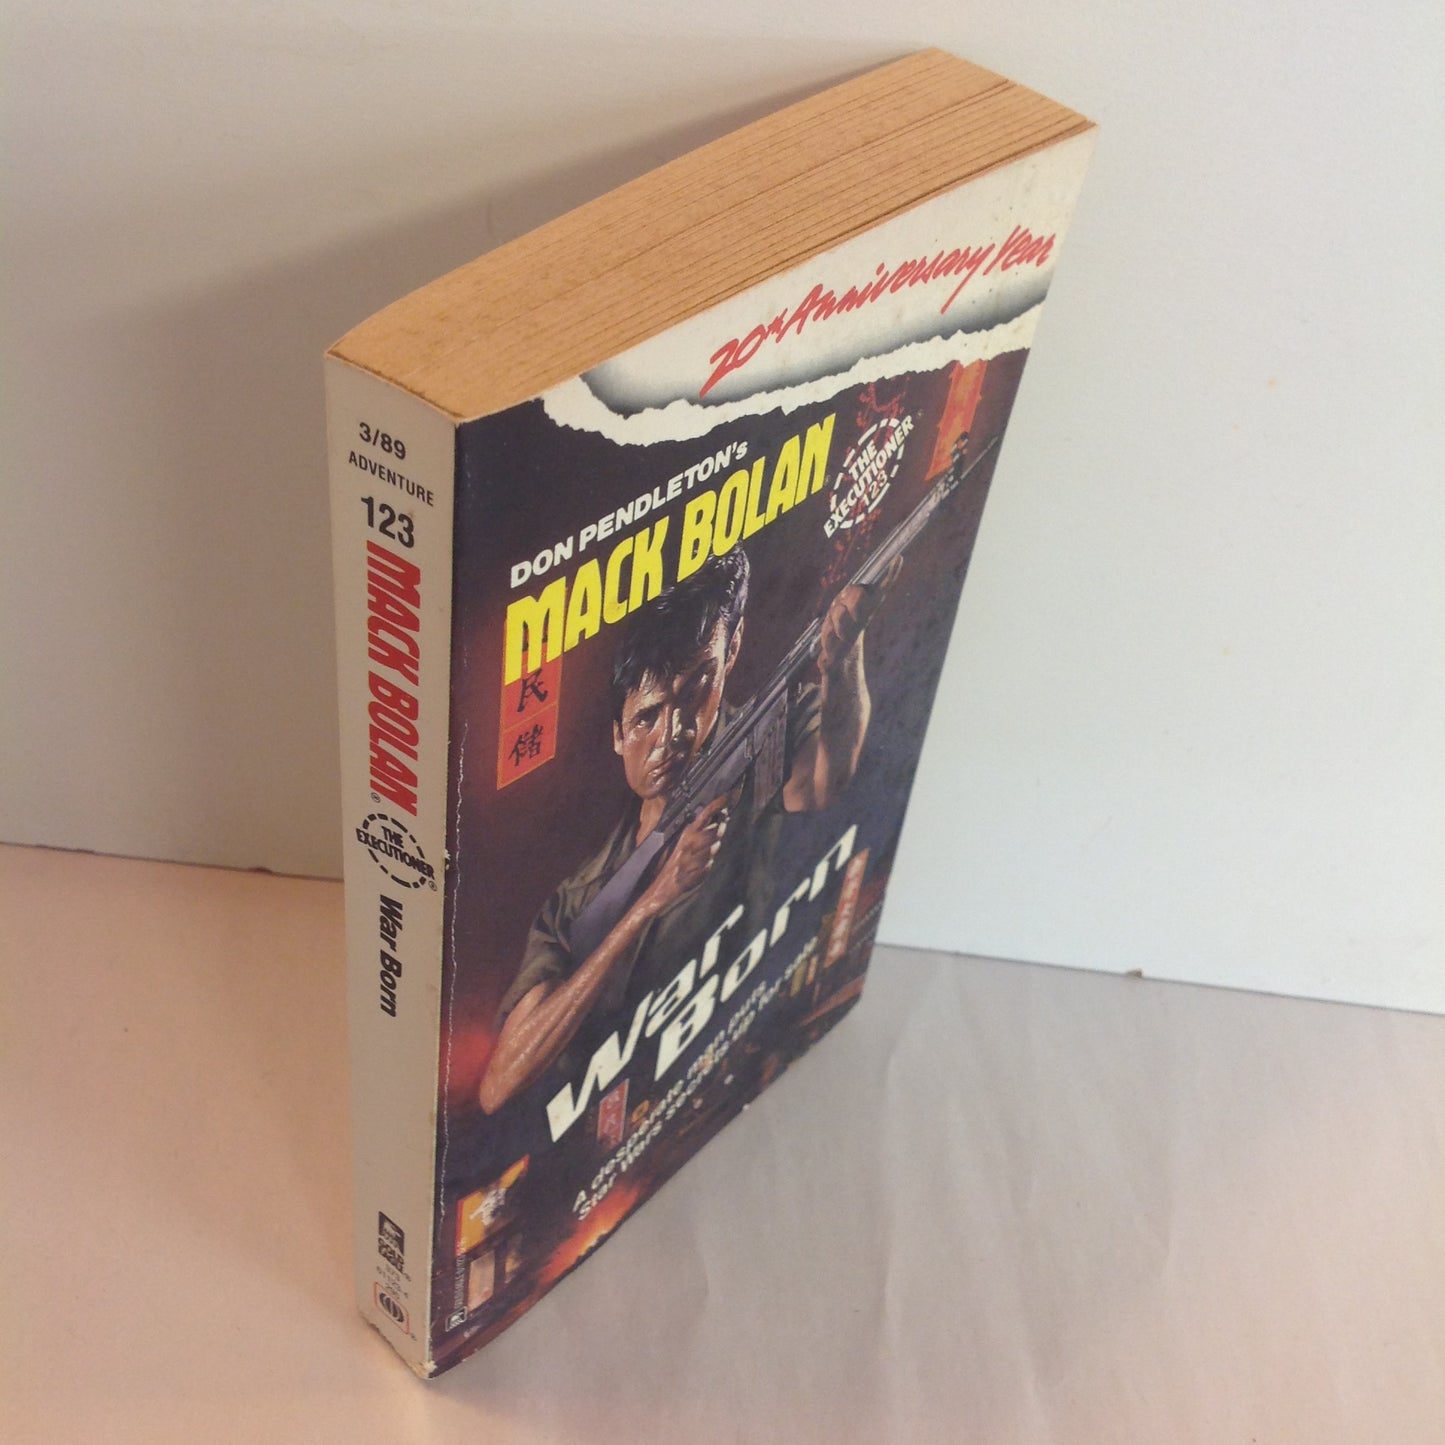 Vintage 1989 Mass Market Paperback Don Pendleton's Mack Bolan The Executioner #123: War Born